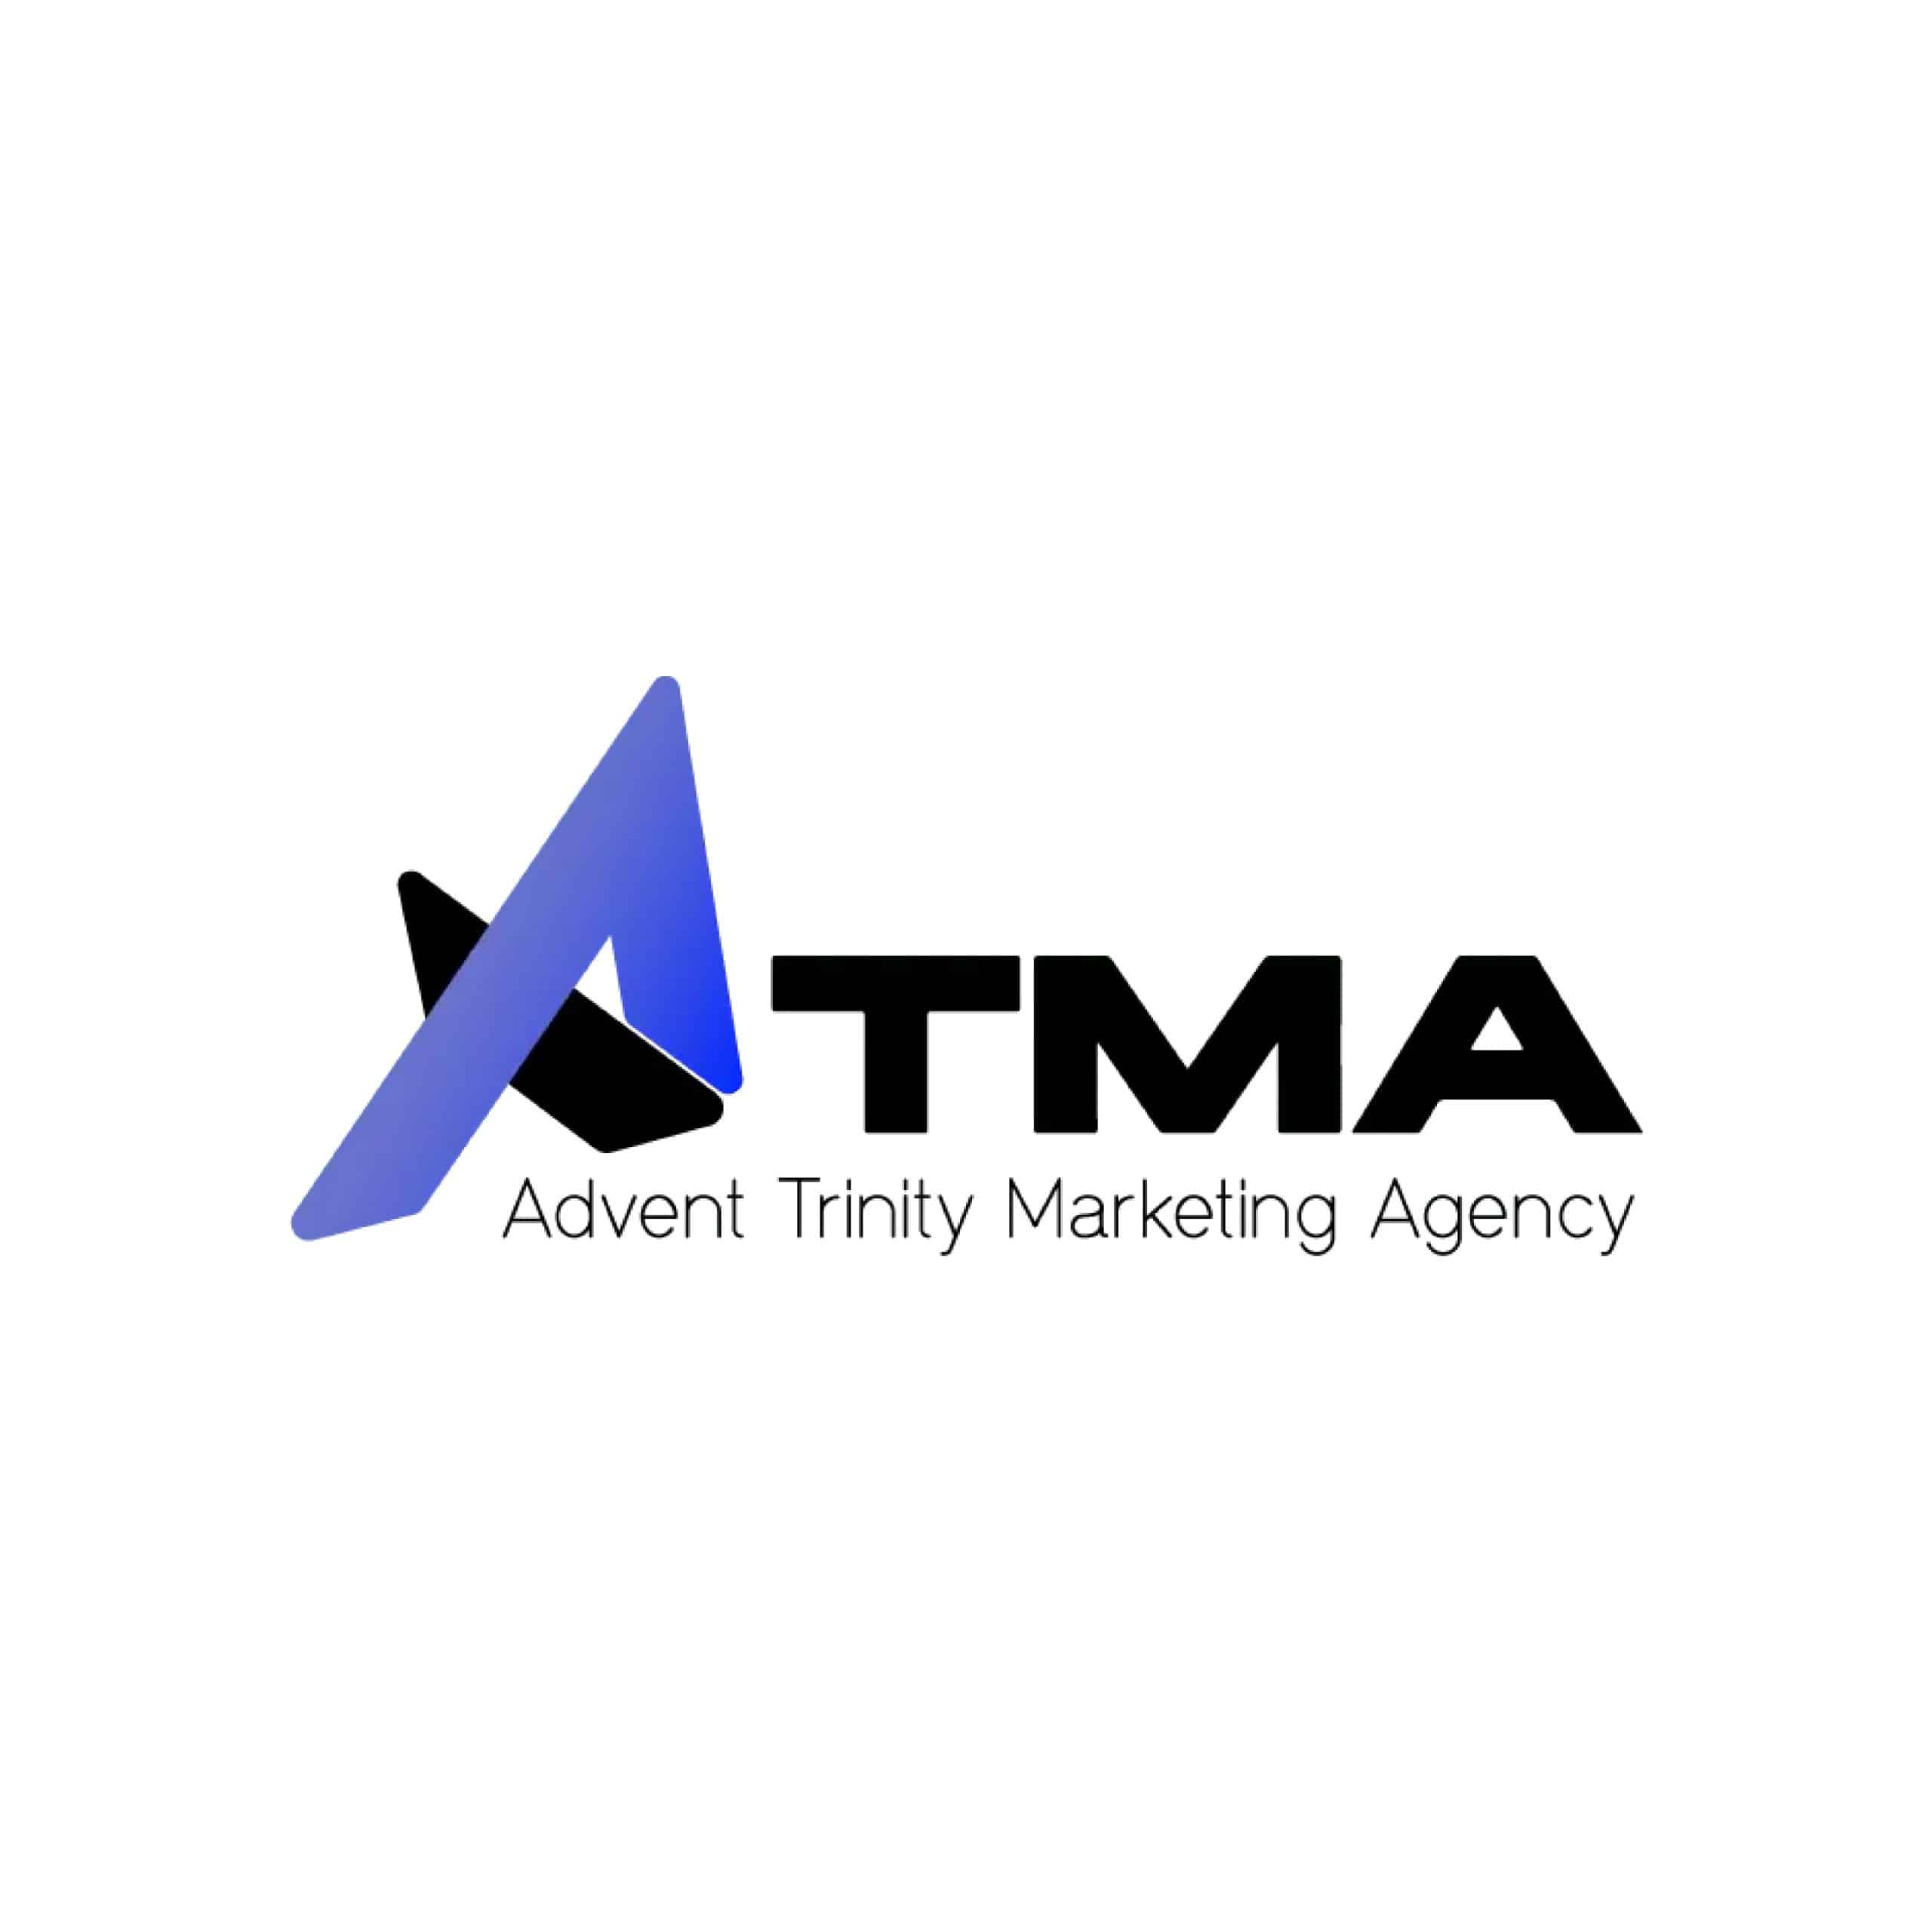 atma advent trinity marketing agency logo in black